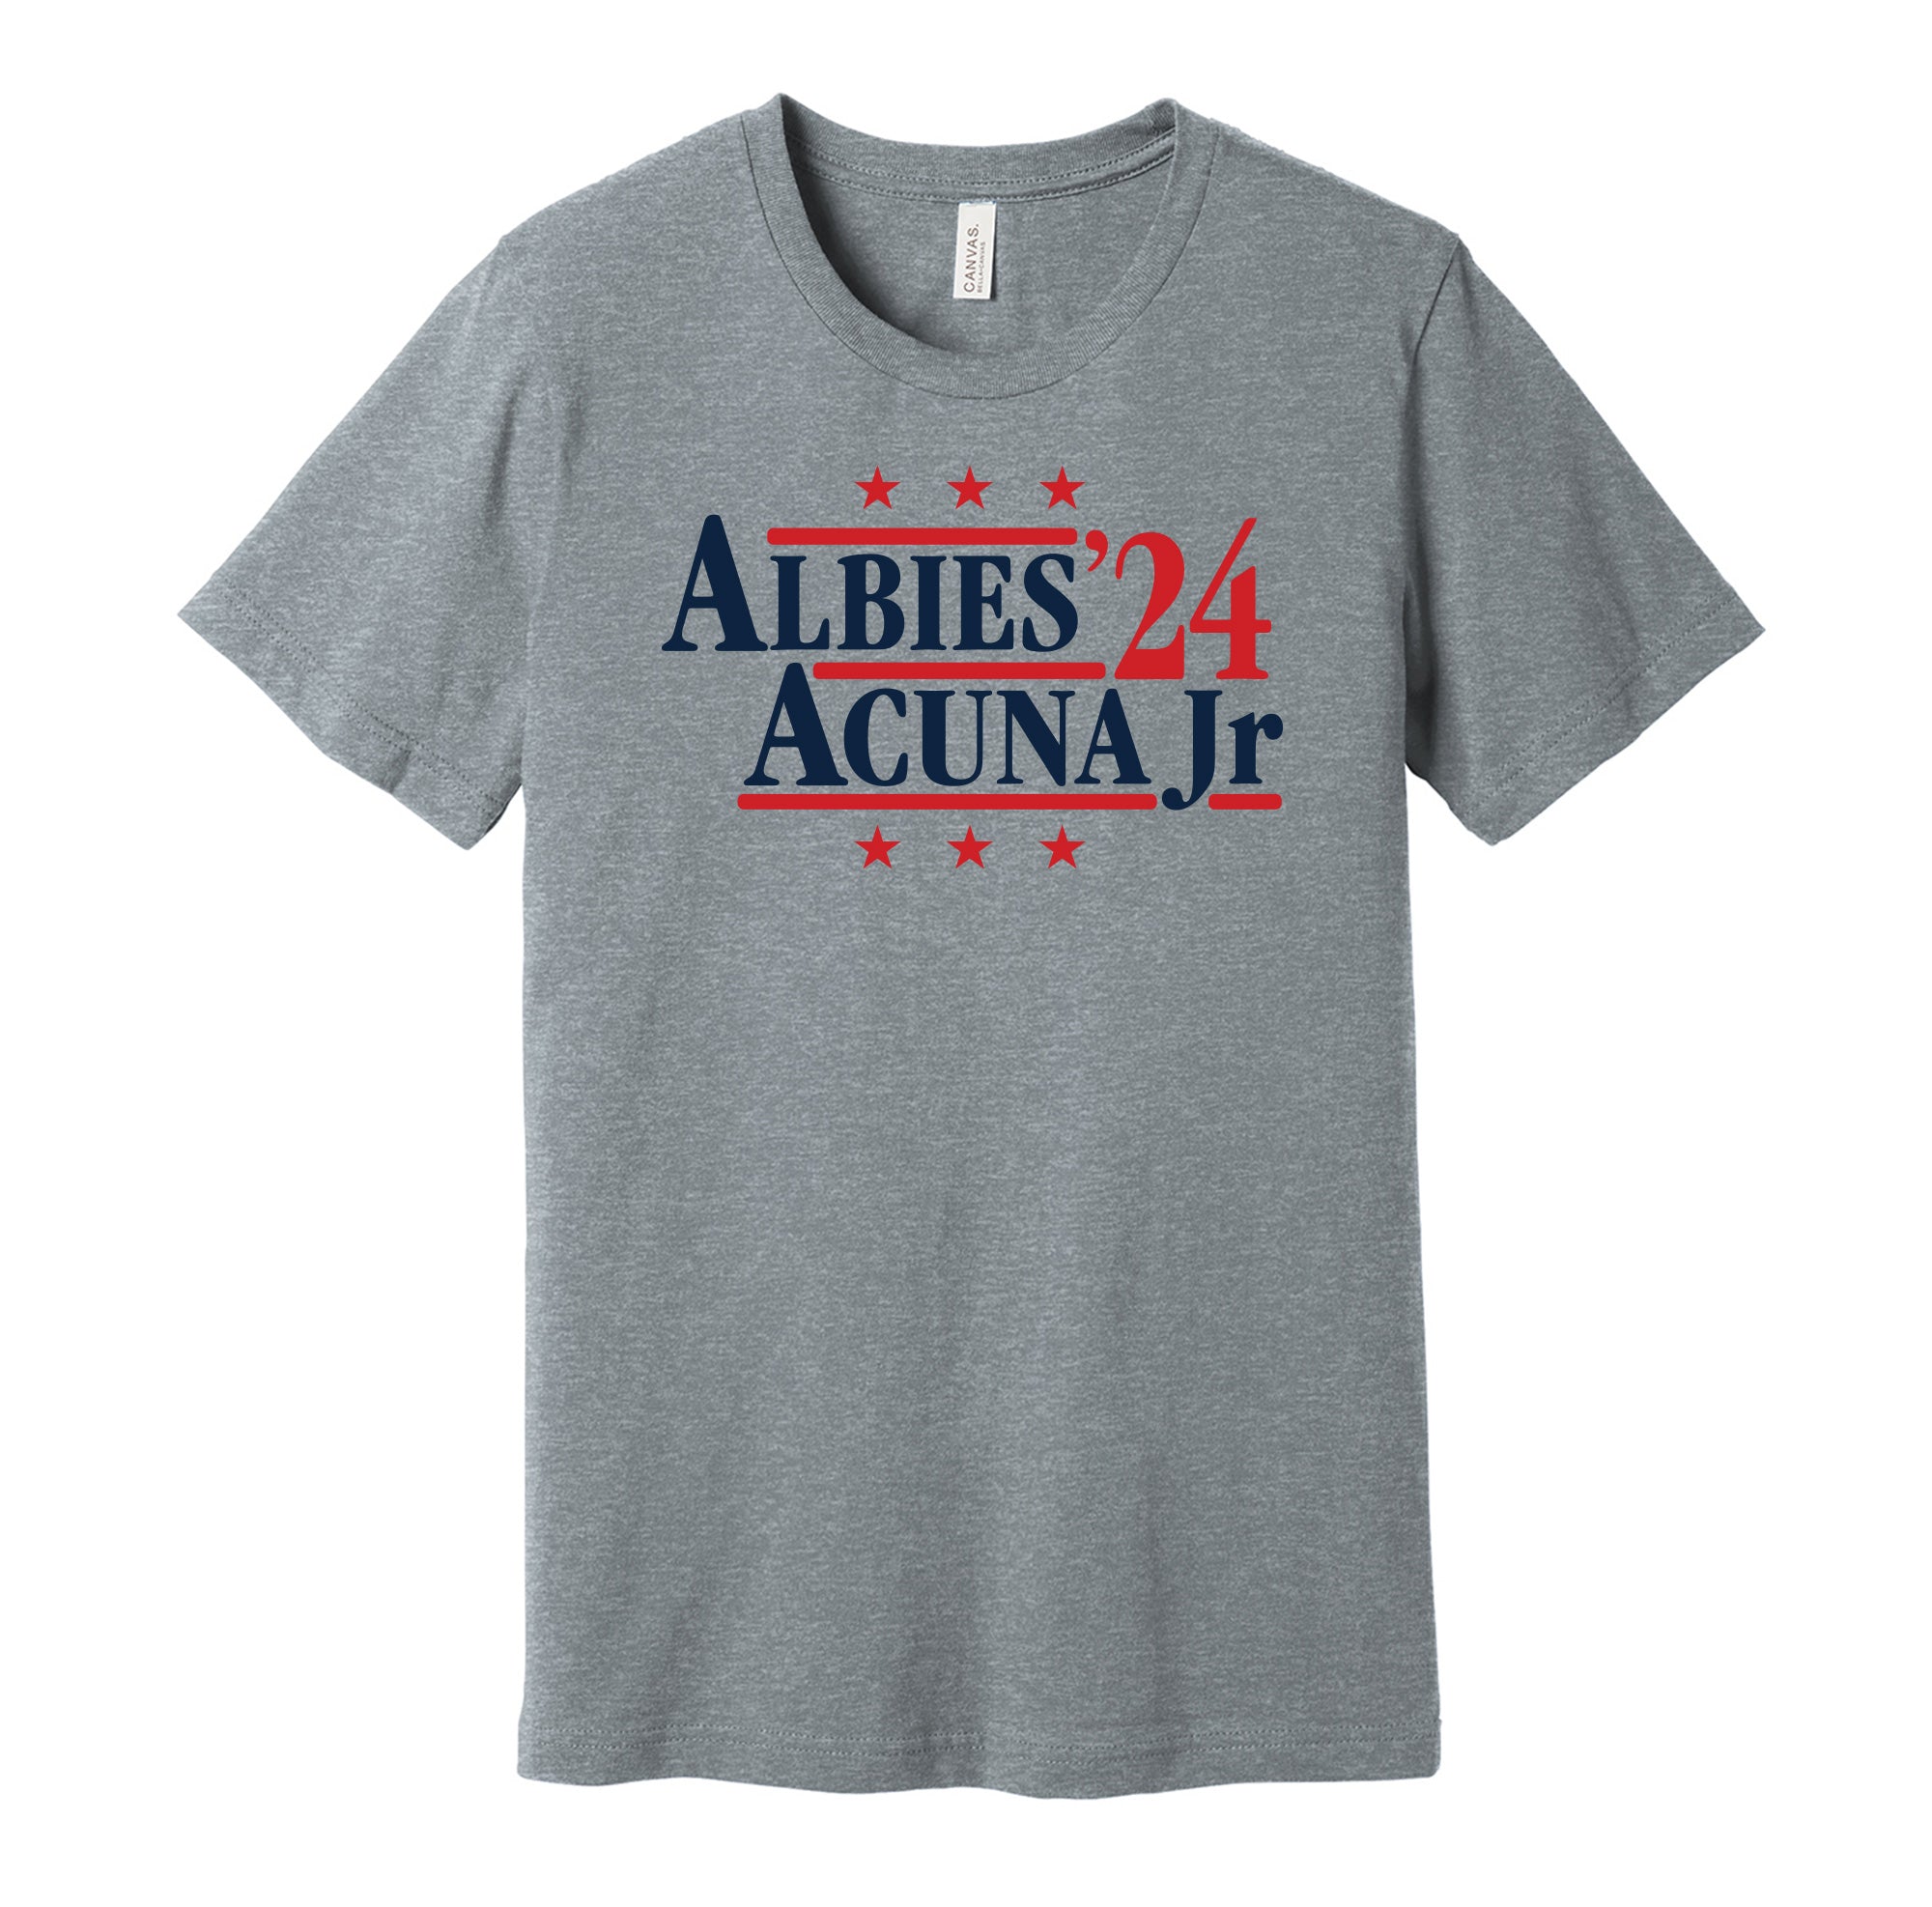 Atlanta Braves baseball shirt t-shirt ATL Freeman Acuna Albies